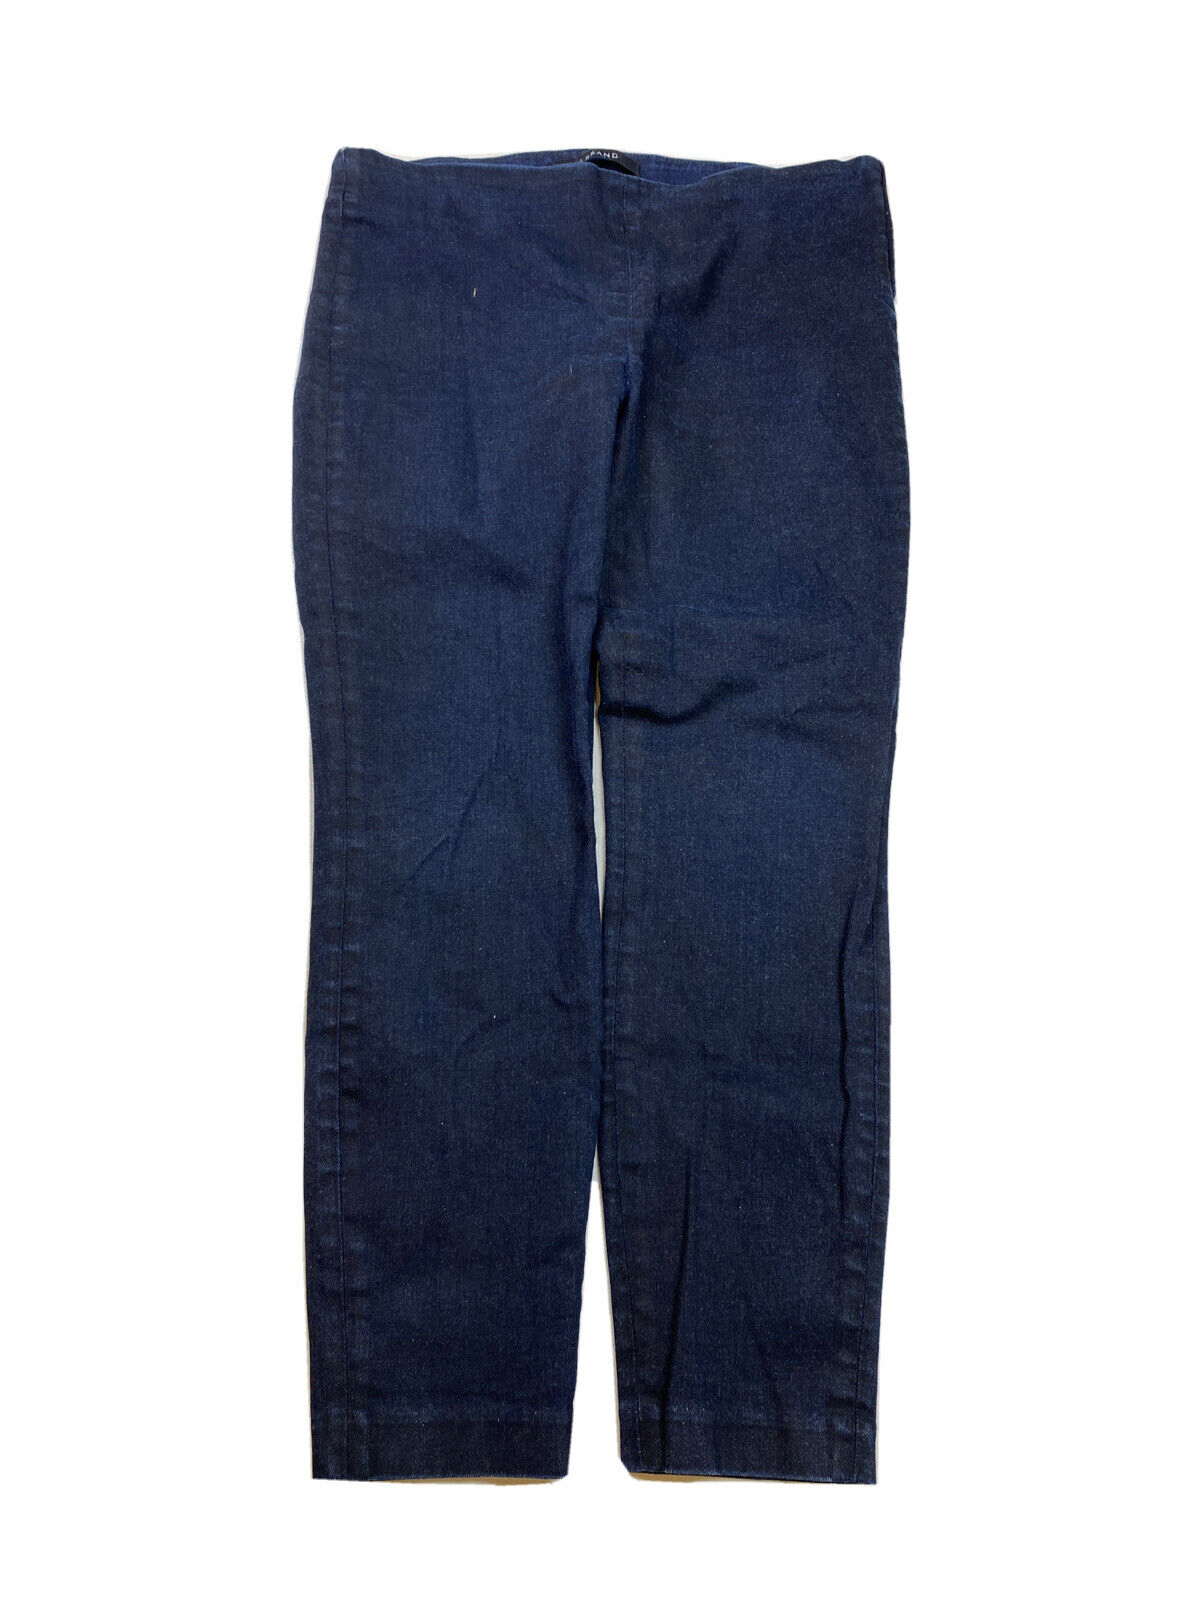 J Brand Women's Dark Wash Side Zip Denim Capri Jeans - 31